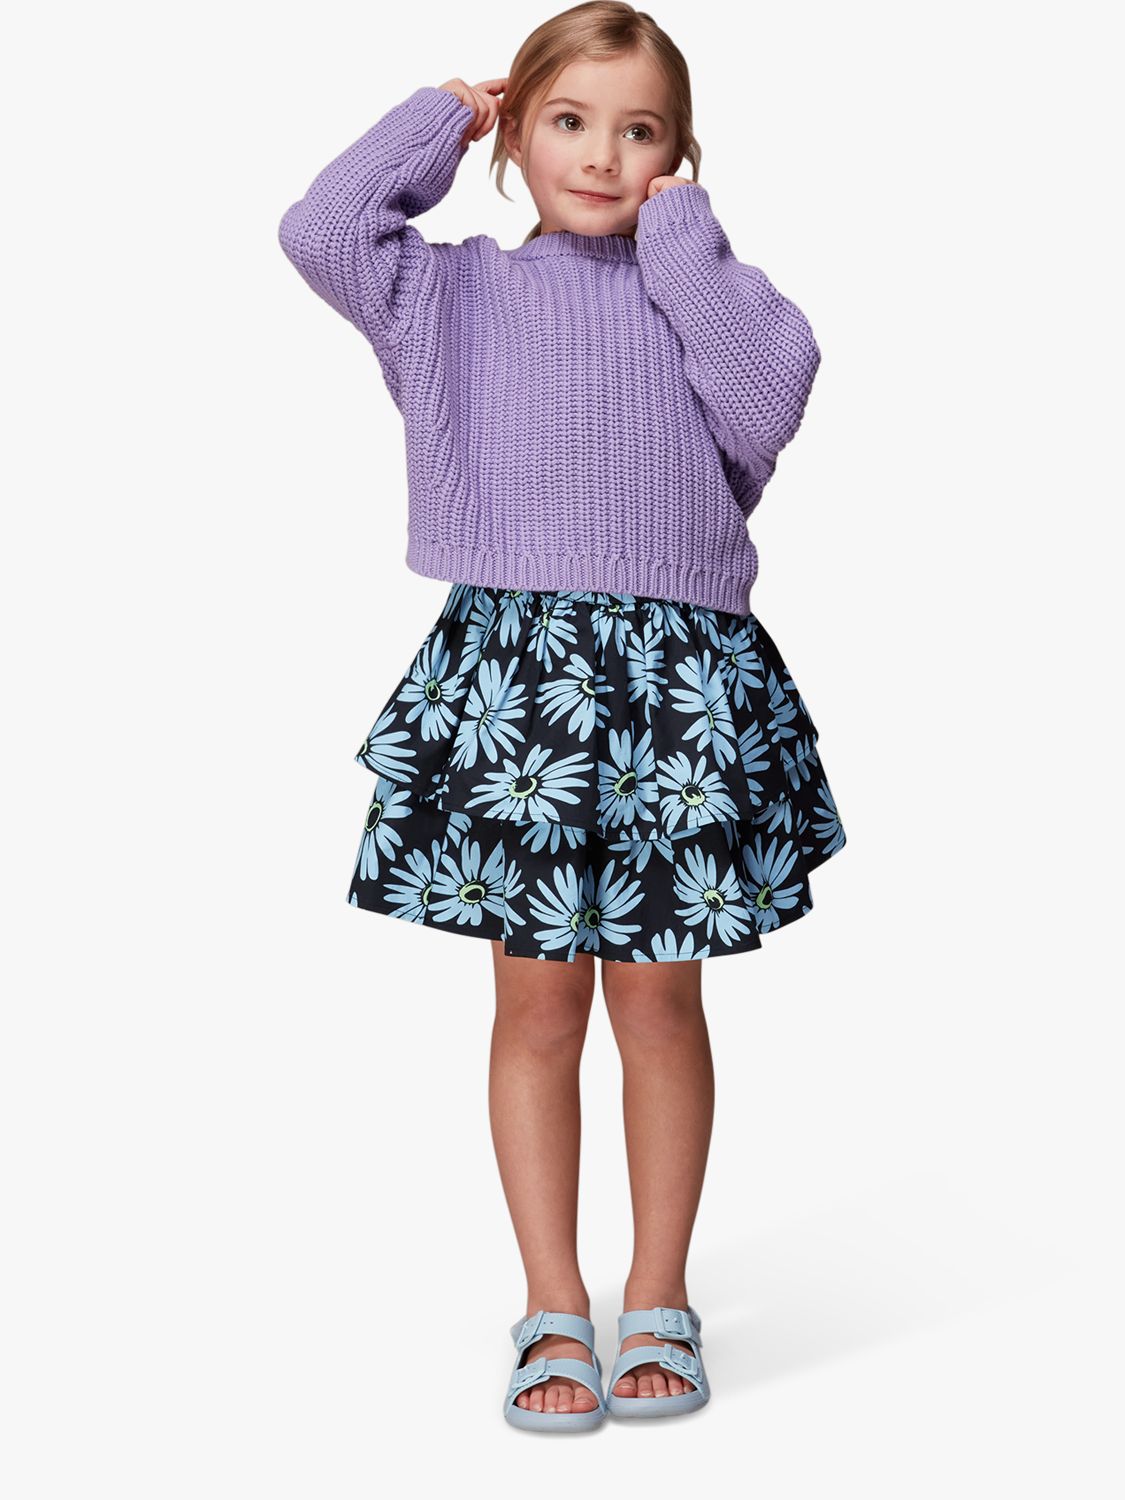 Whistles Kids' Daisy Print Ra-Ra Skirt, Blue/Multi, 3-4 years